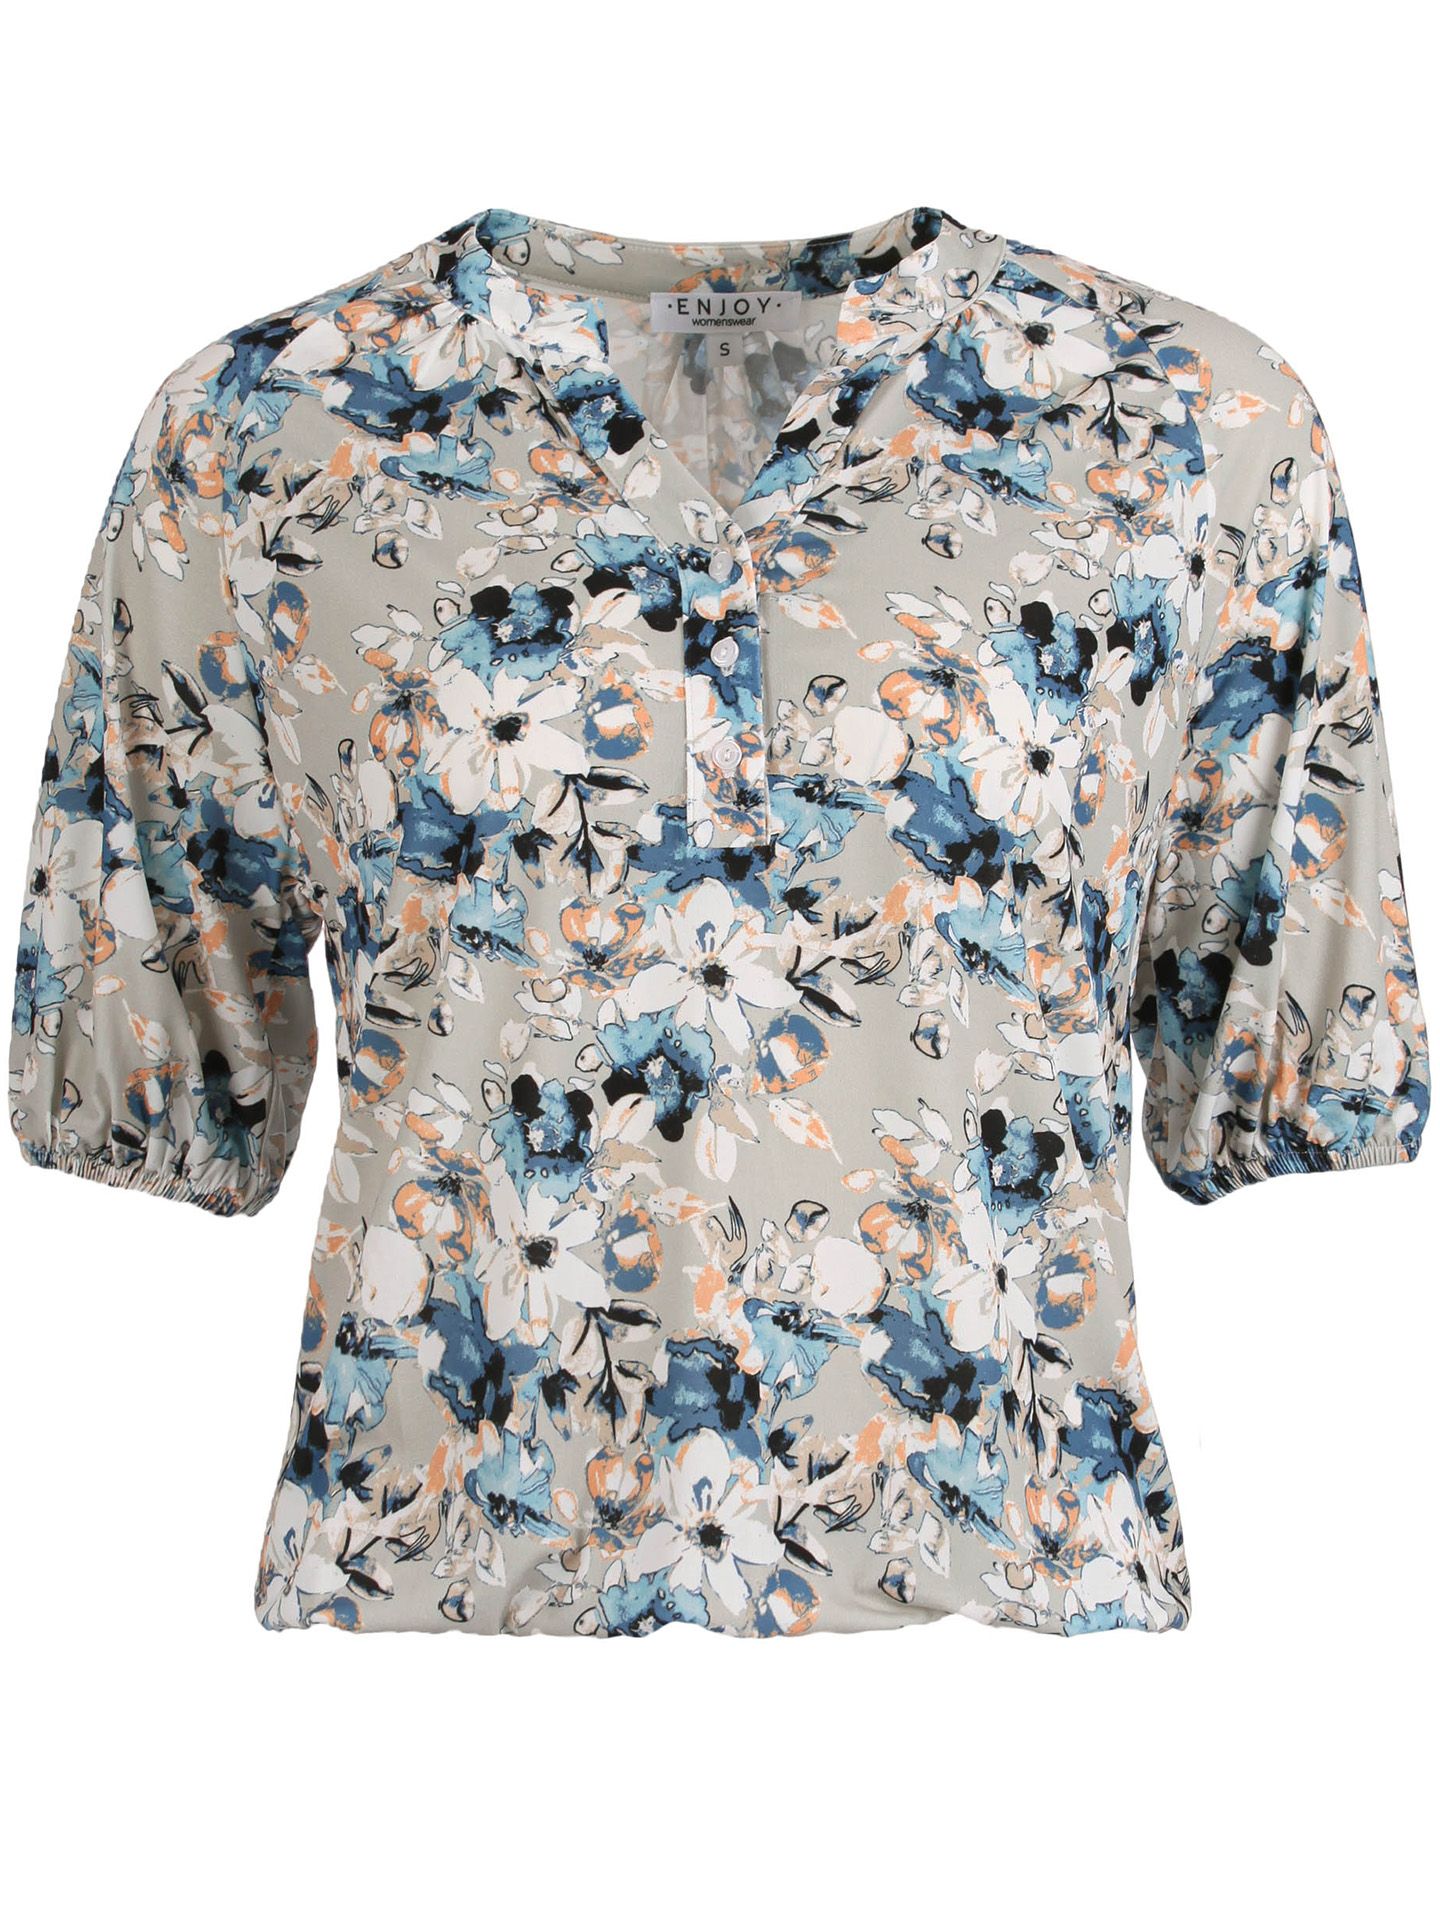 Enjoy Womenswear T-shirt Rosa Blauw 00079627-1350